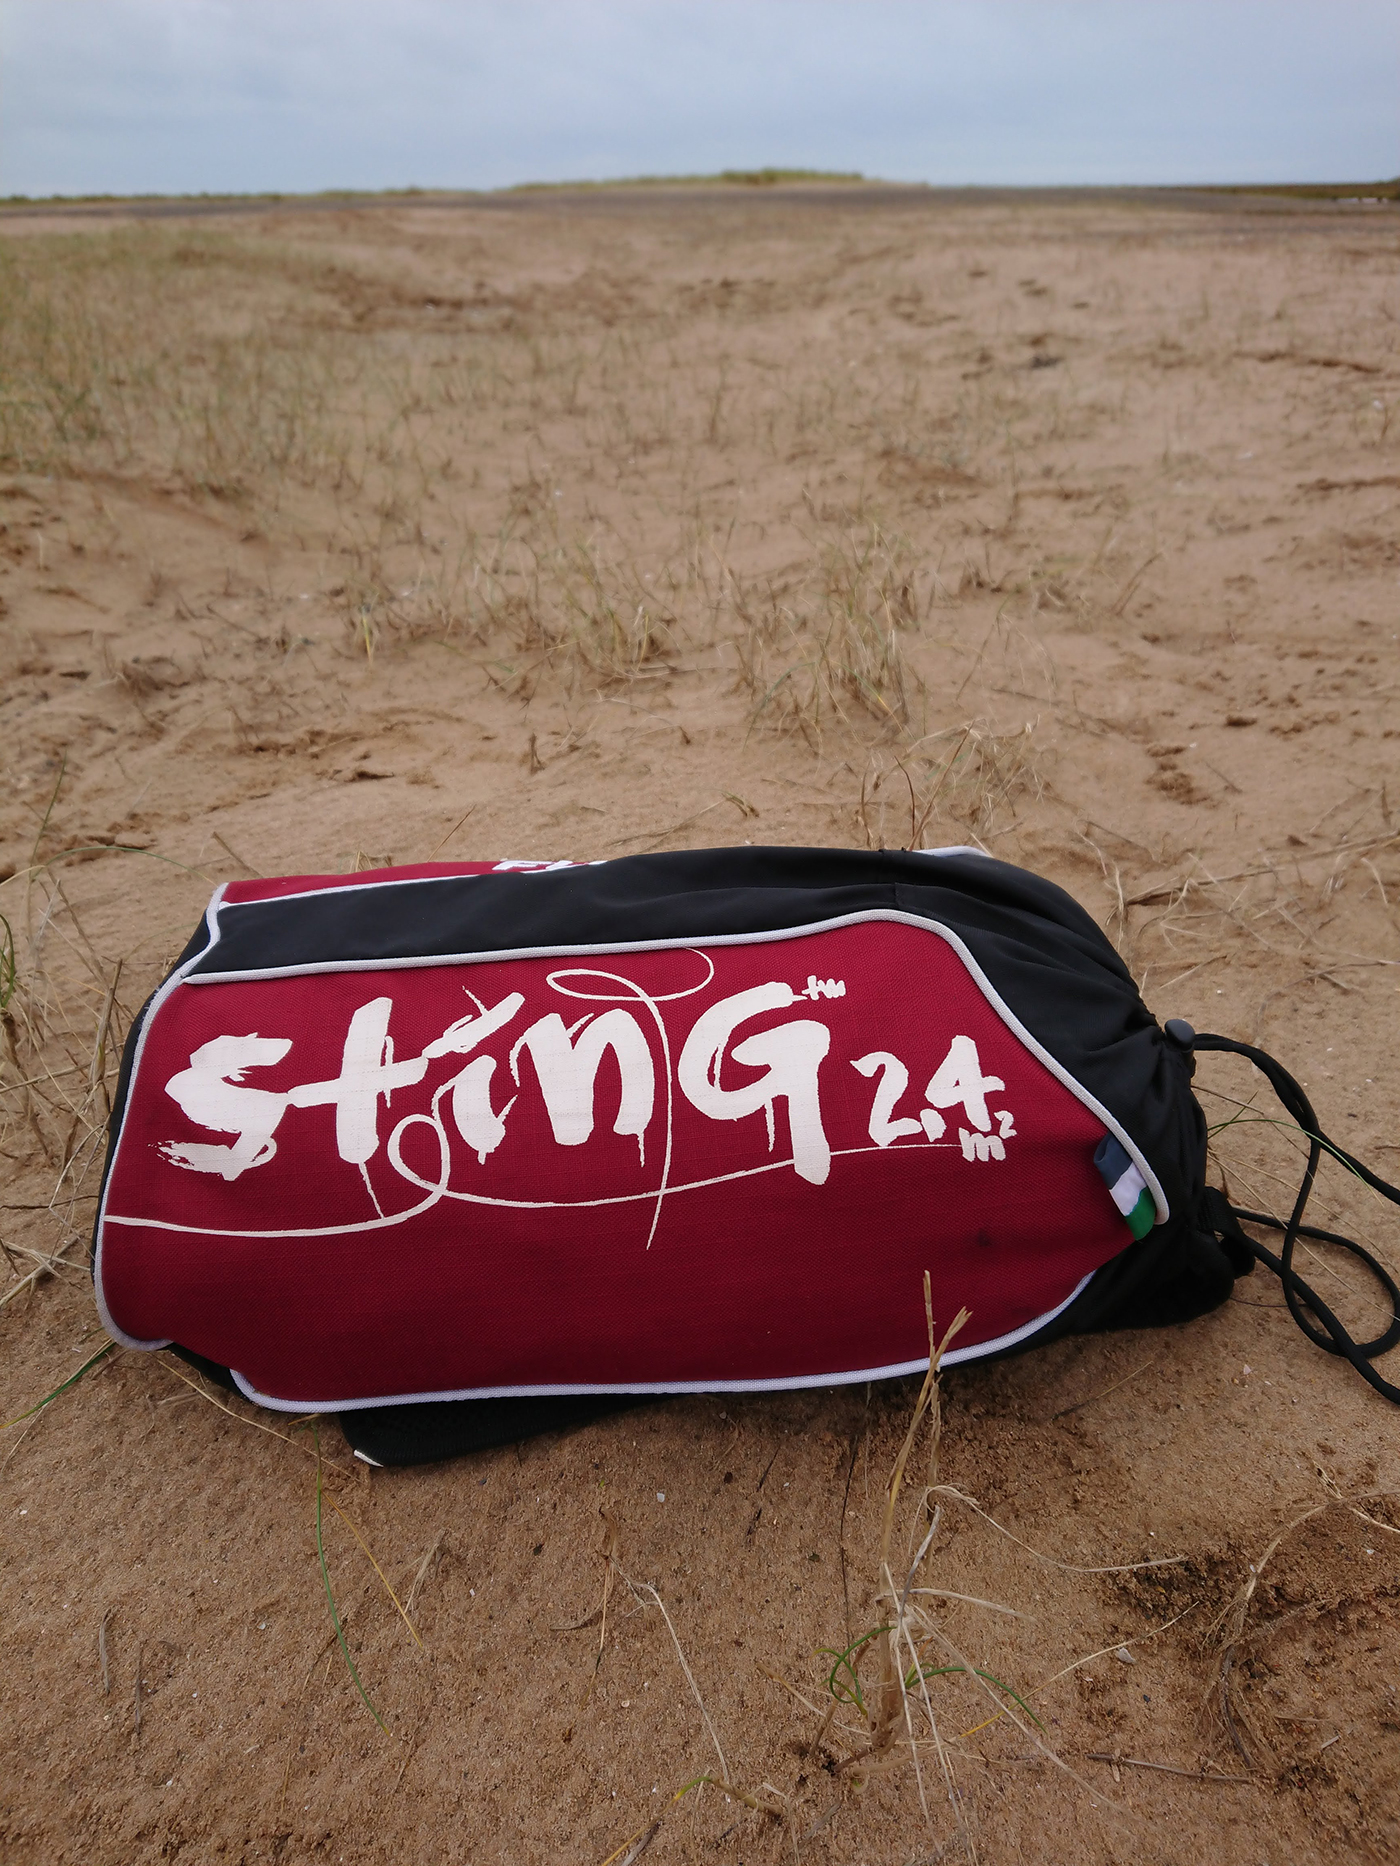 Sing Flexifoil power kit flying on the beach